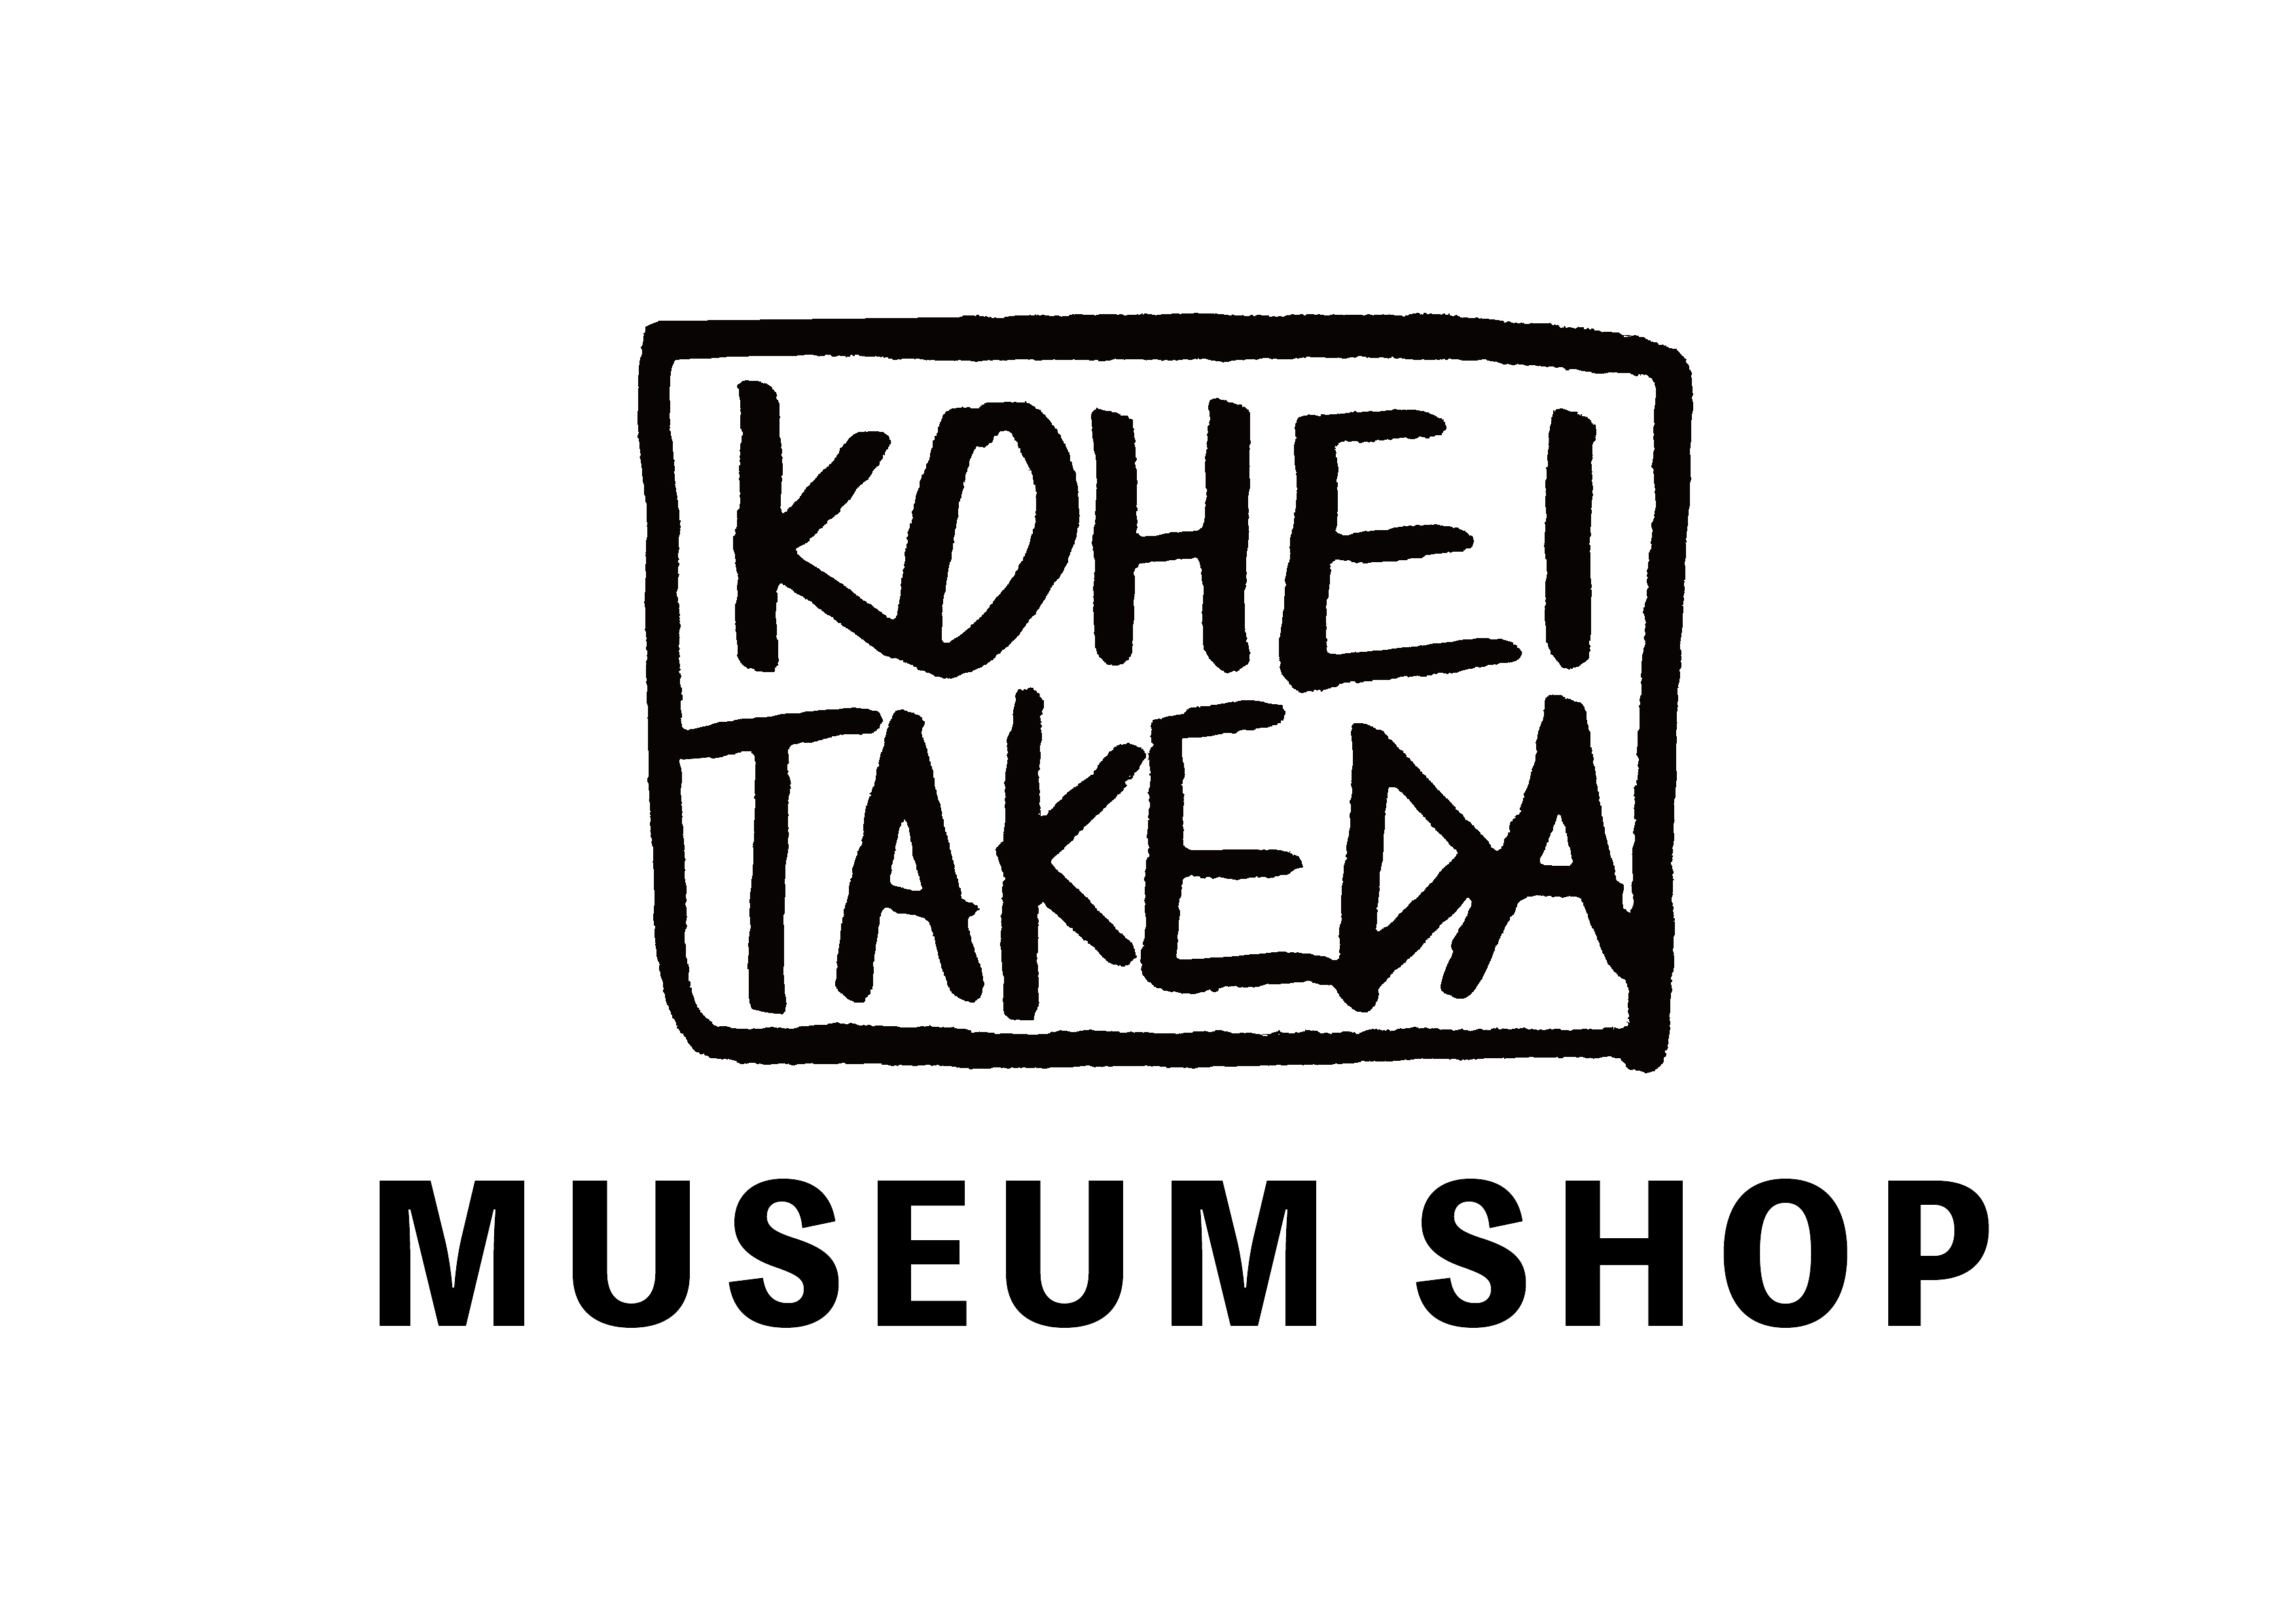 KOHEI TAKEDA MUSEUM SHOP